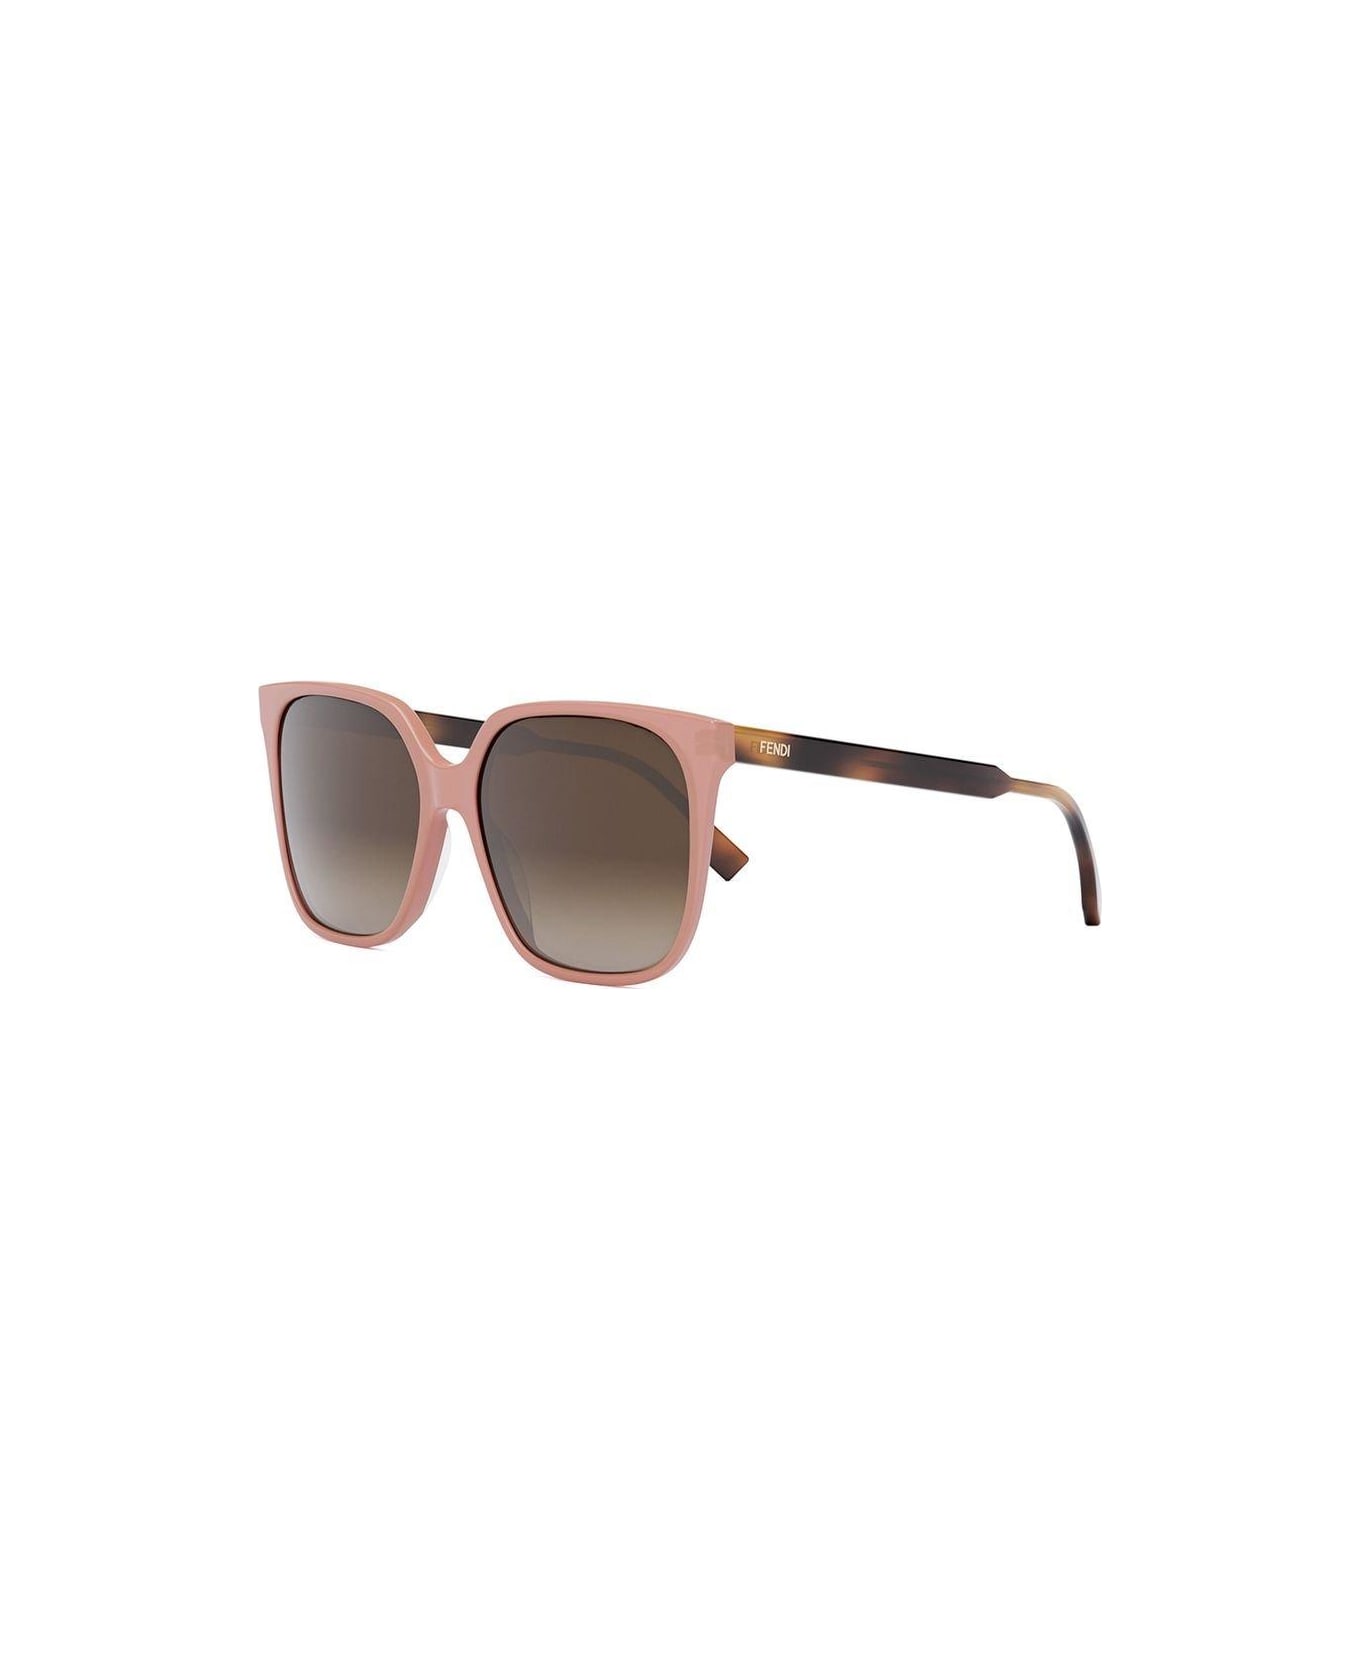 Fendi Eyewear Square Frame Sunglasses - 72f